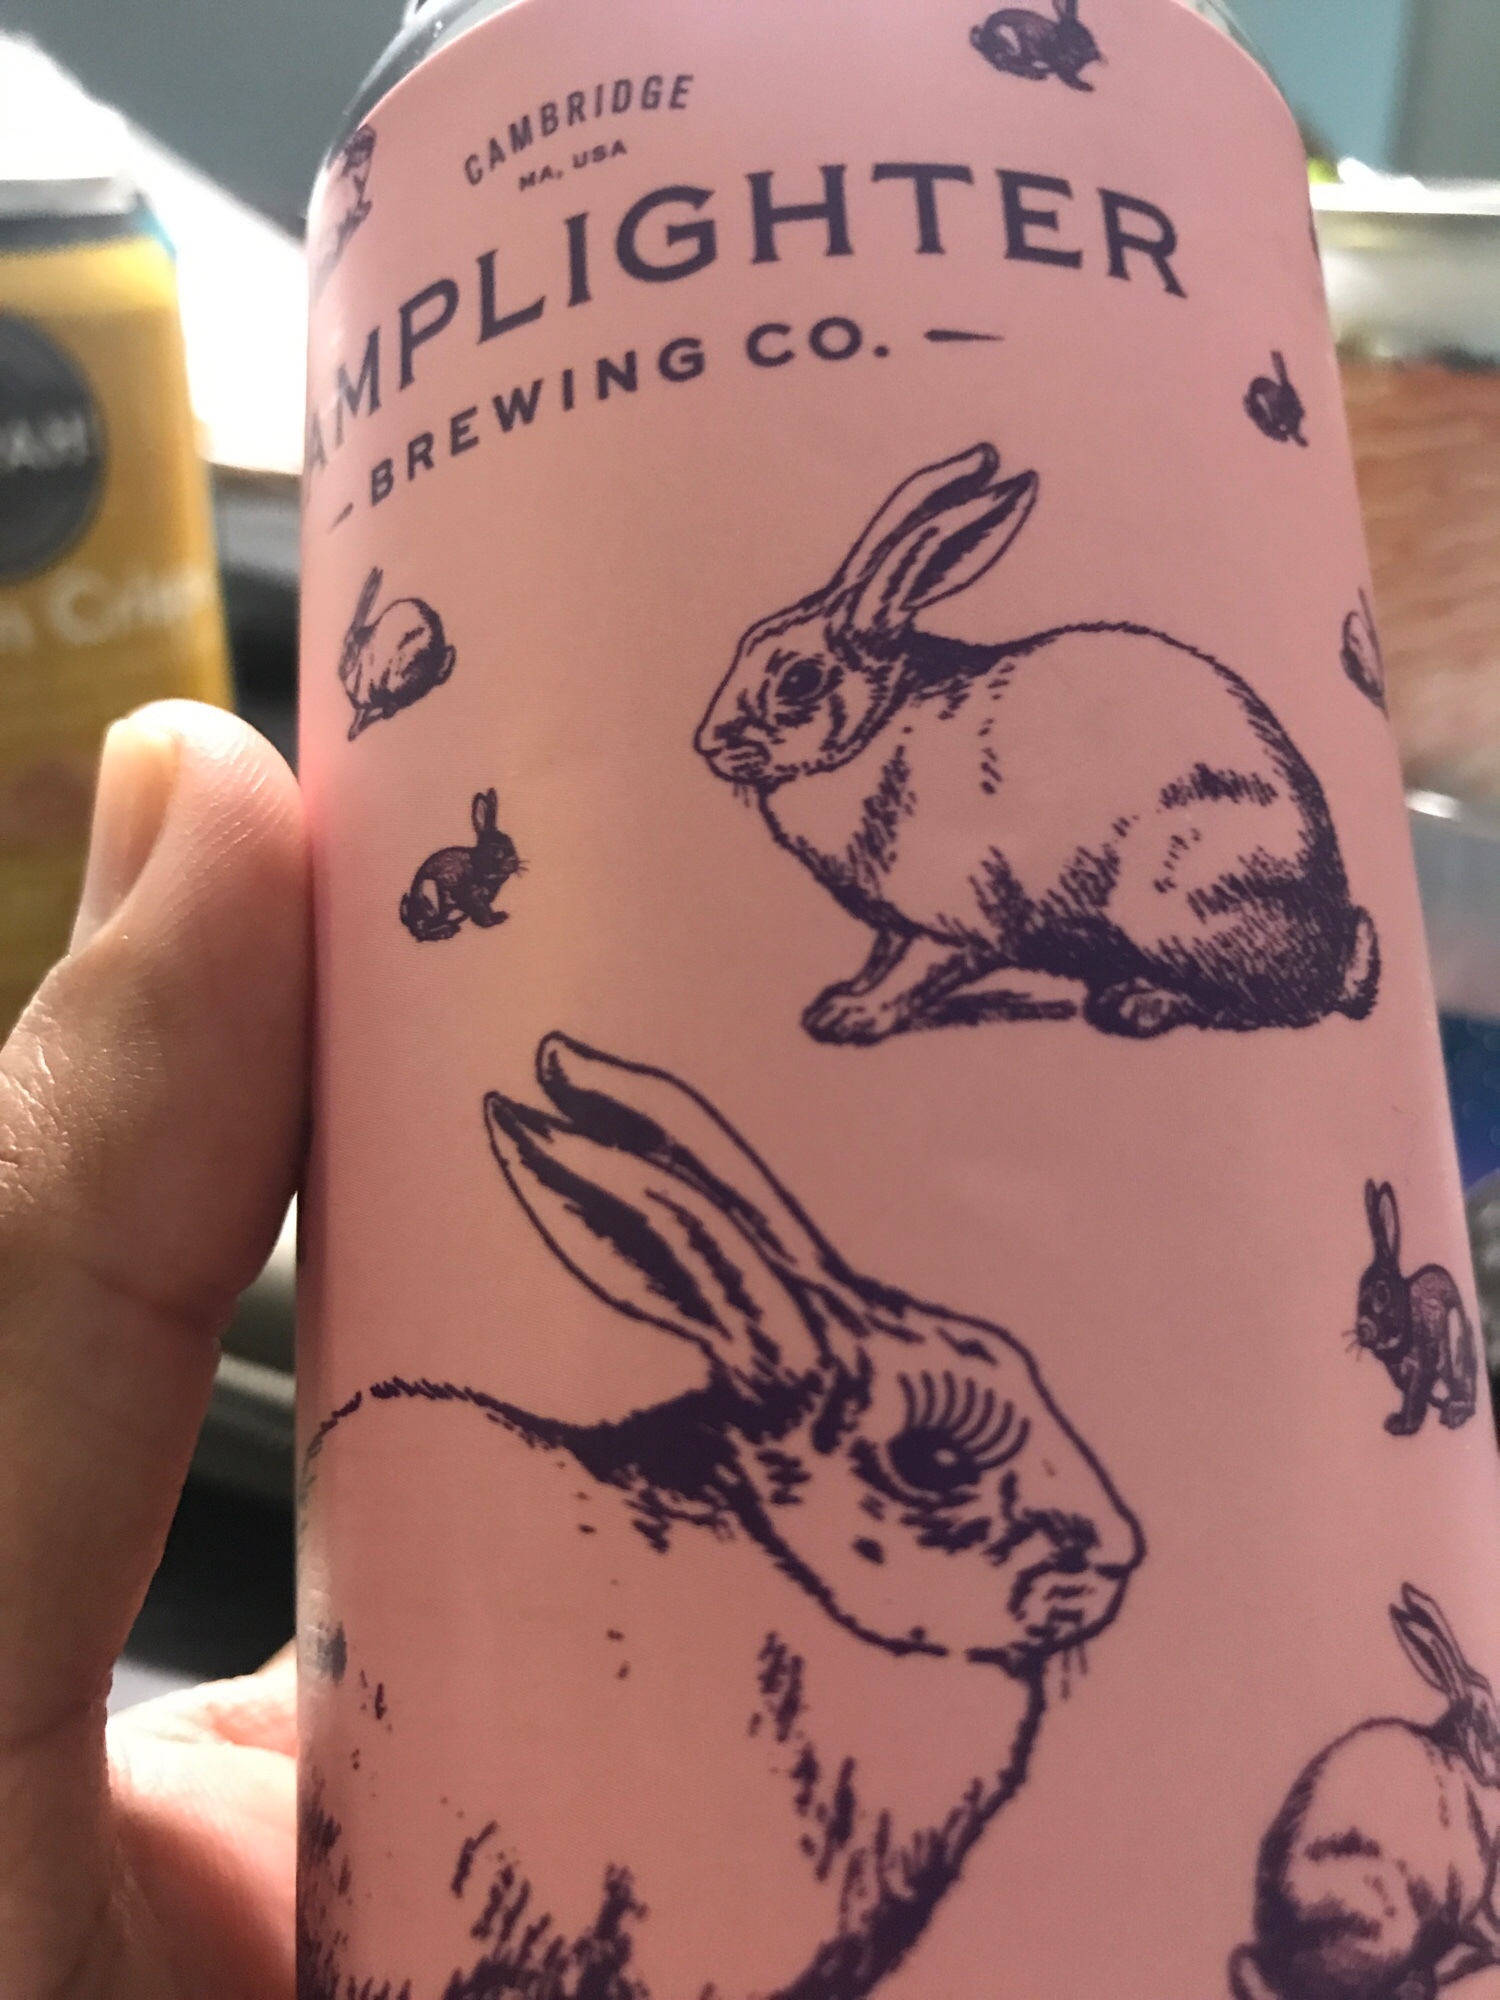 Lamplighter Brewing Co. Rabbit Rabbit